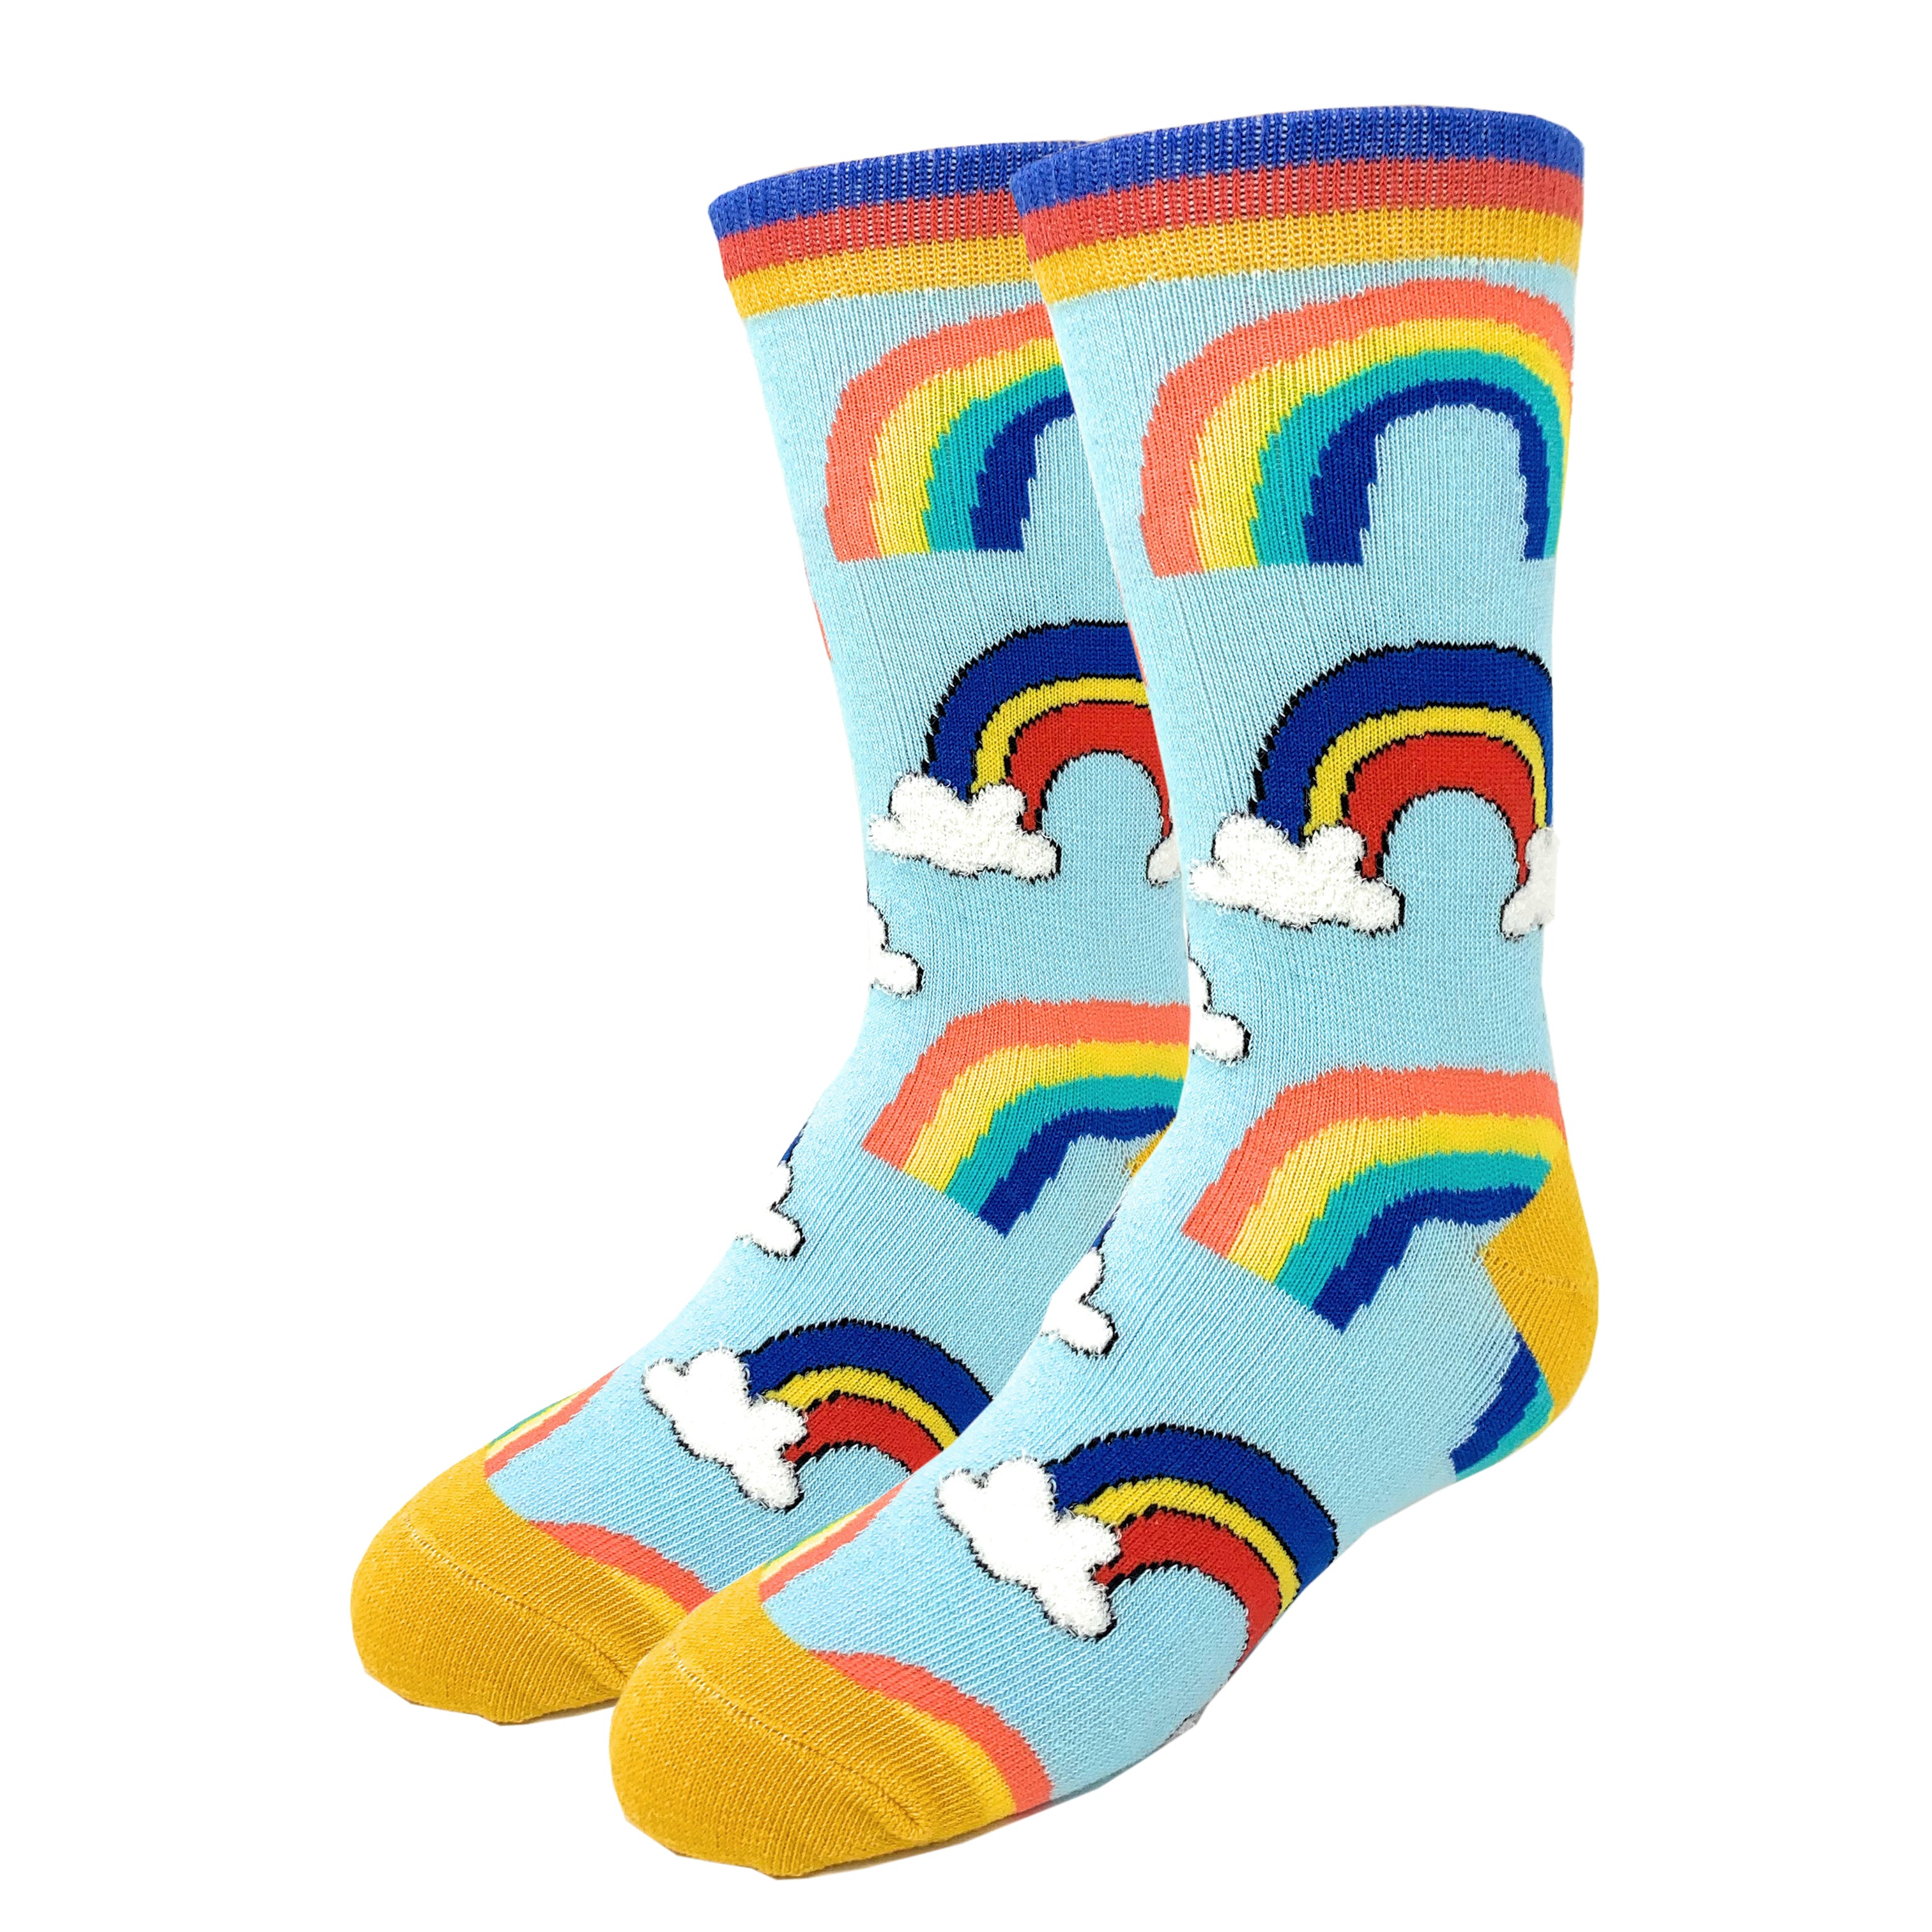 It's a Rainbow Socks, Novelty Crew Socks For Women